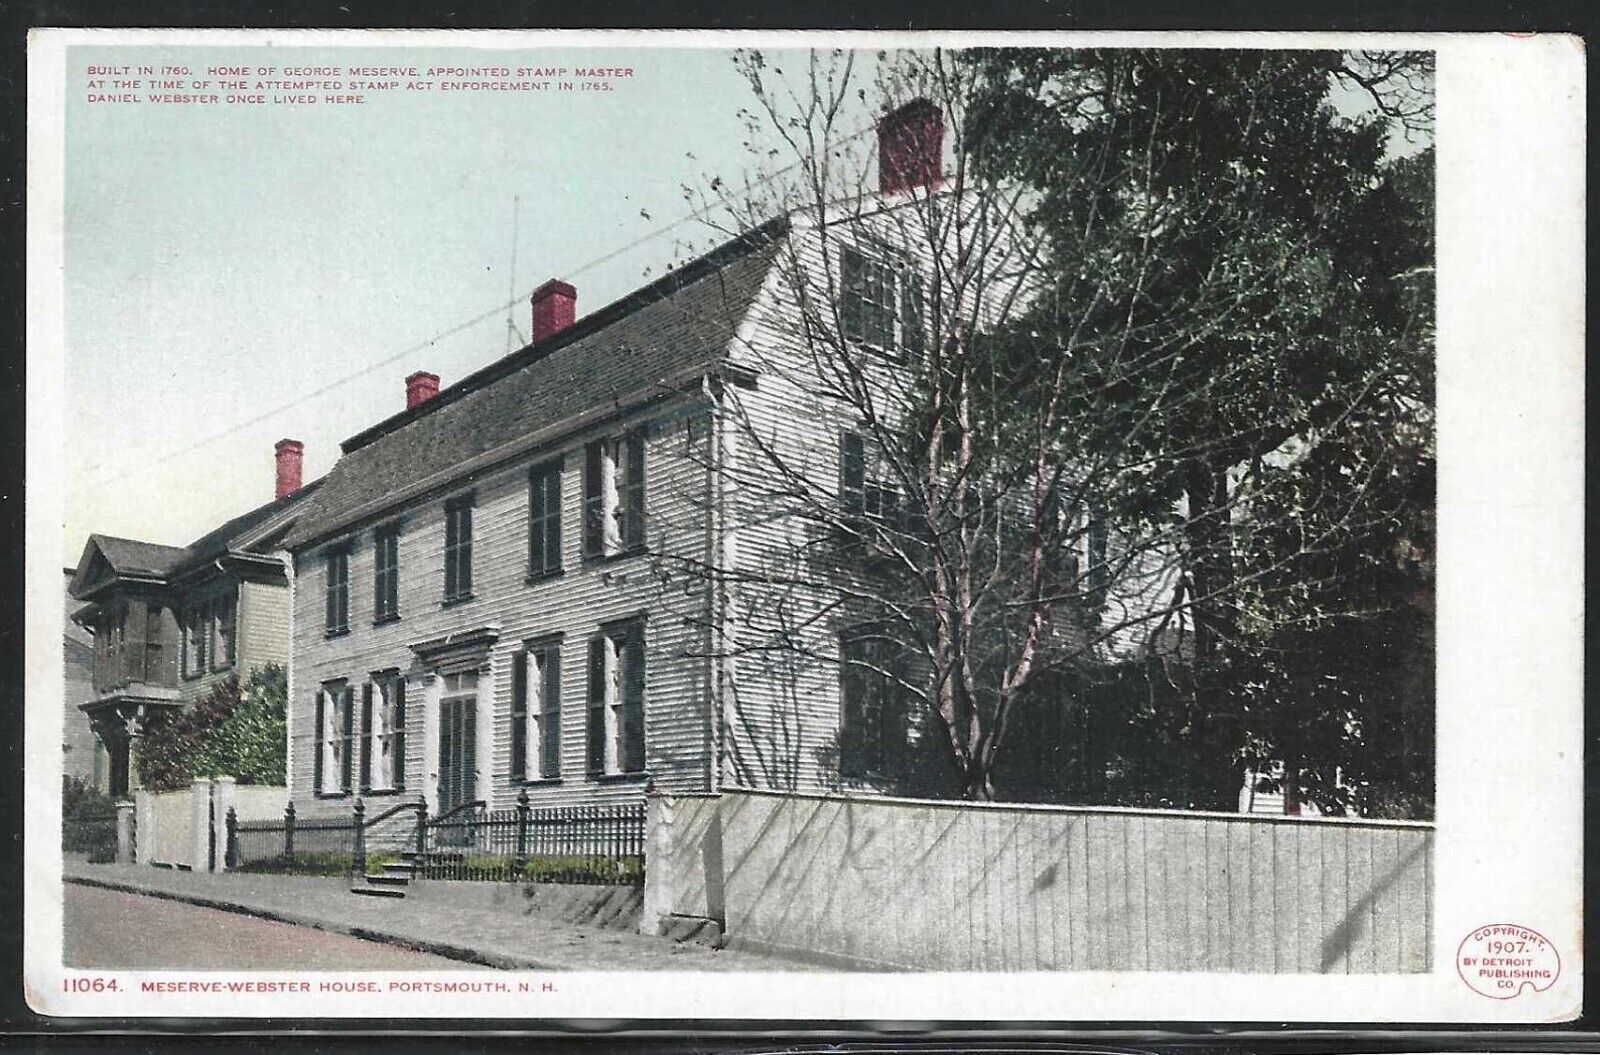 Meserve-Webster House, Portsmouth, N.H., Early Postcard, Detroit Publishing Co.